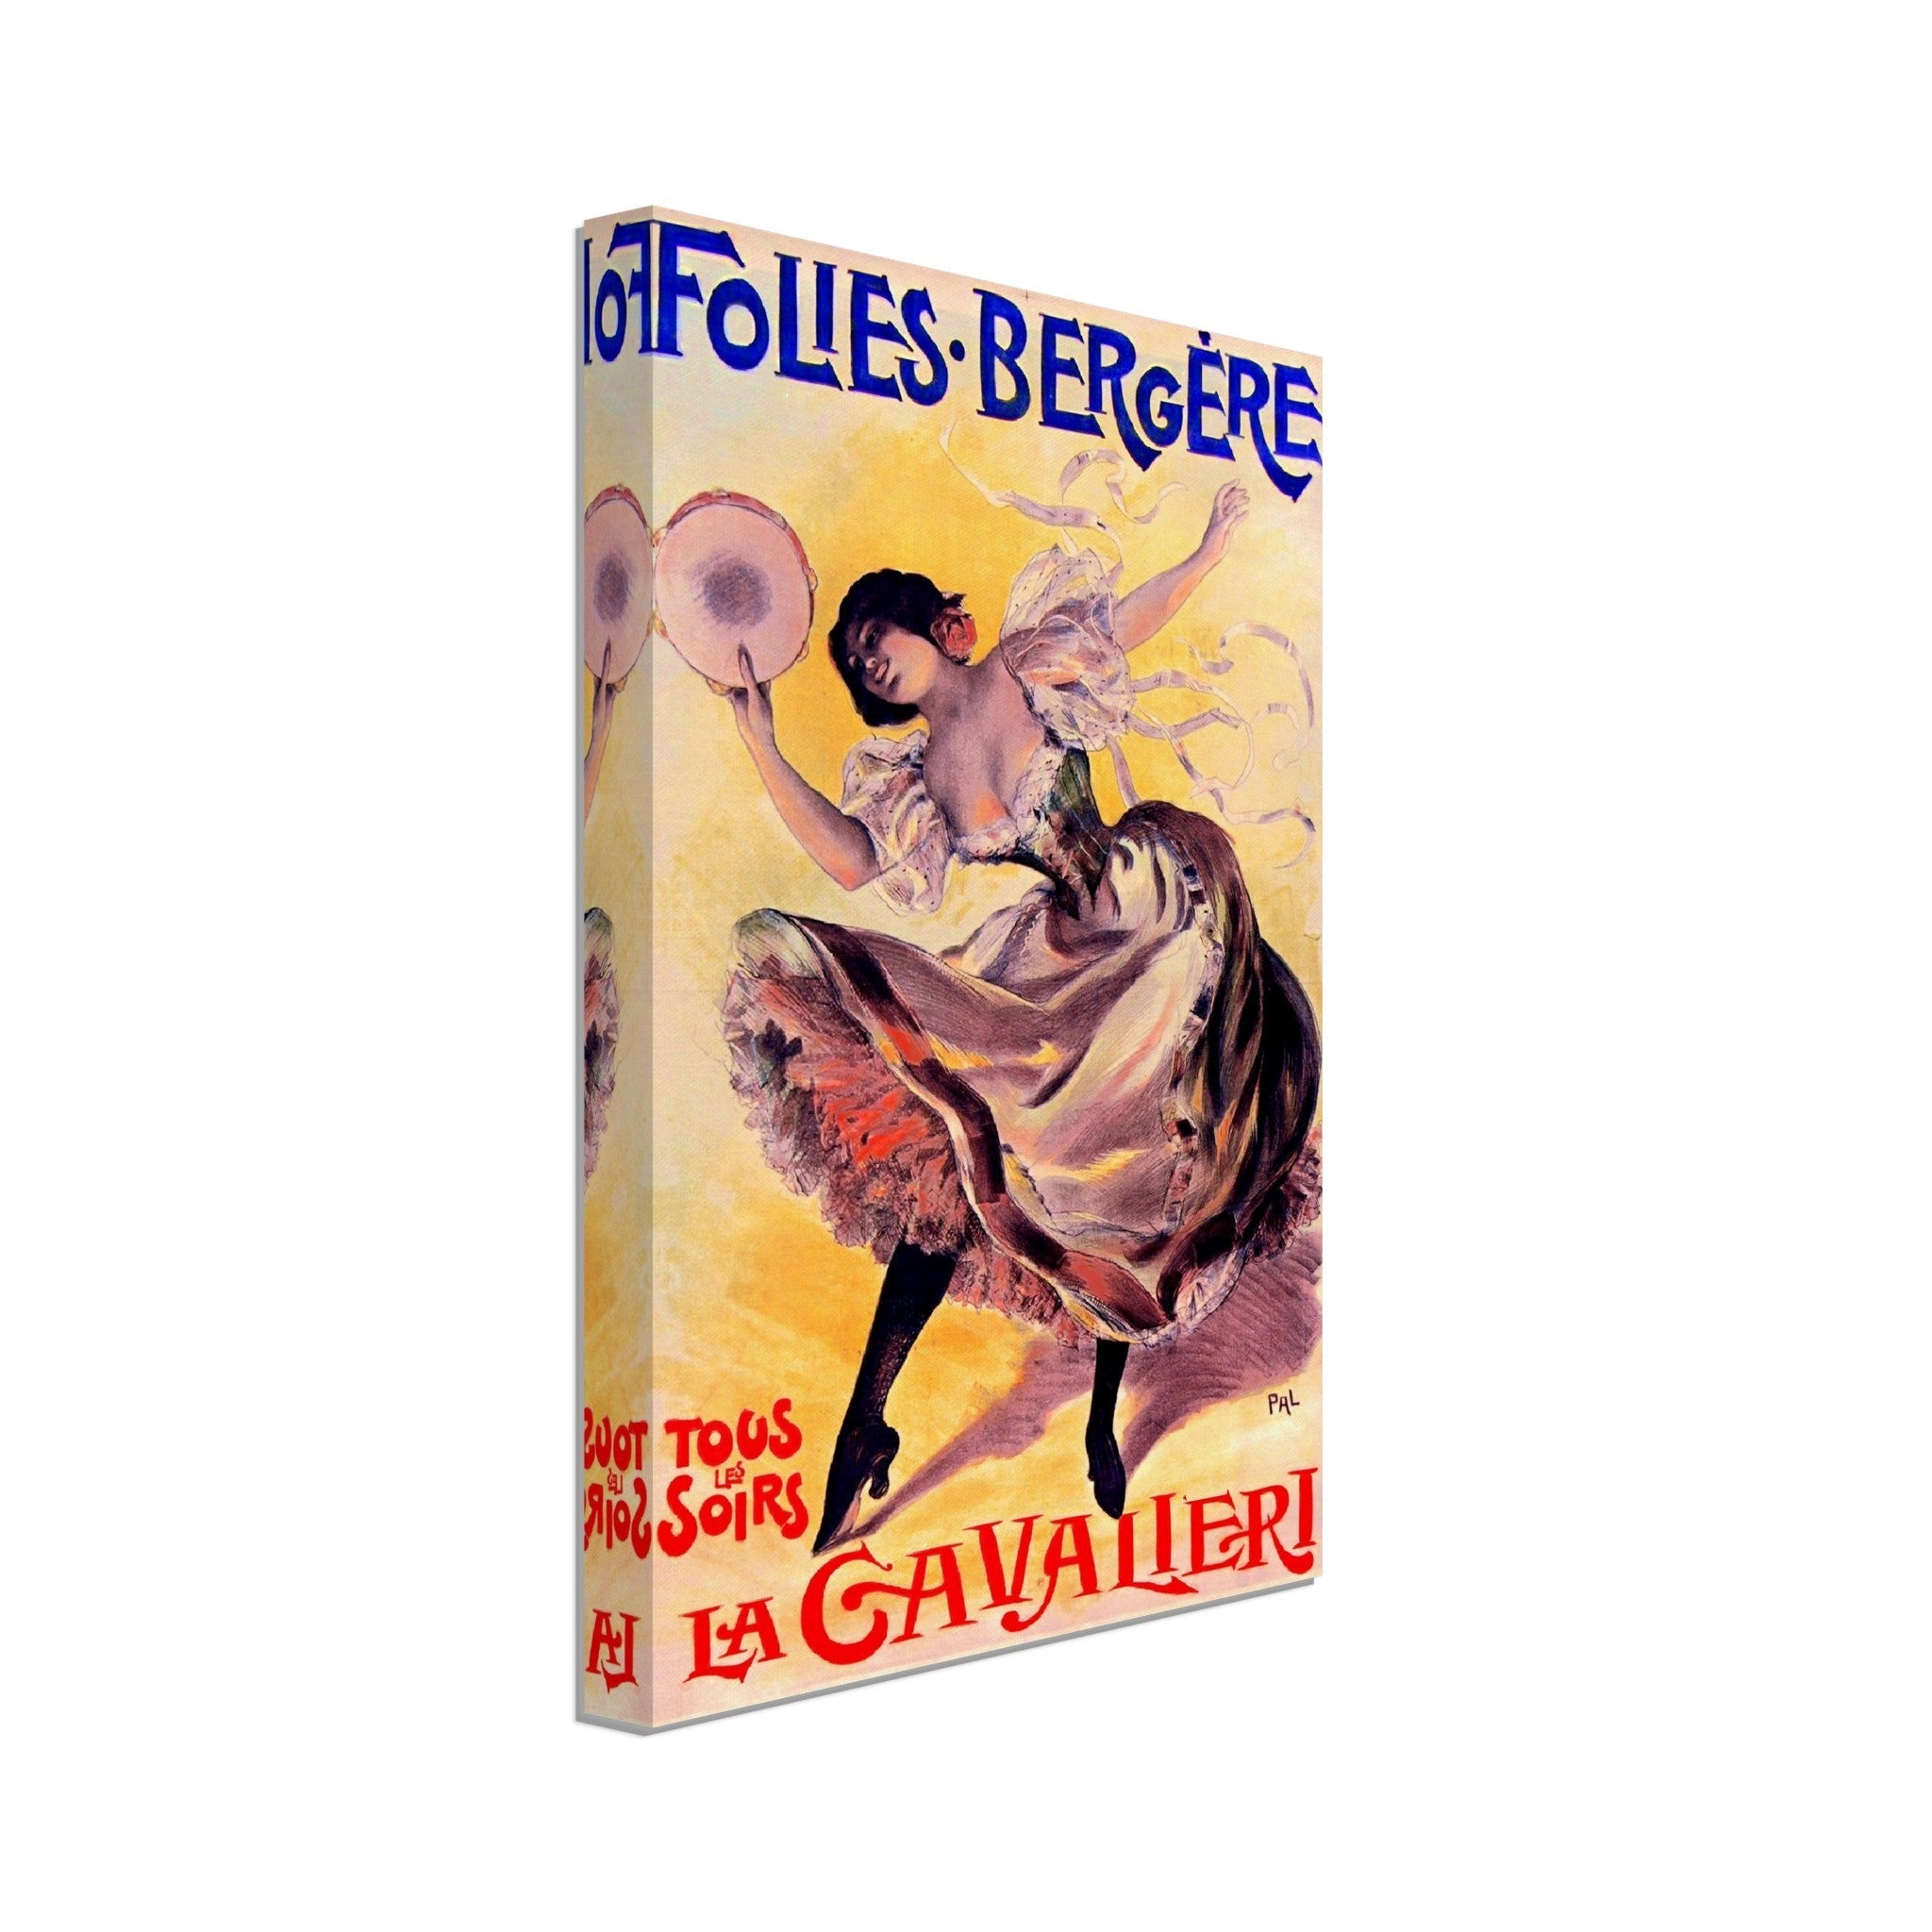 Folies Bergere Canvas La Cavalieri 1897 - Folie Bergere Canvas Print Jean De Paleologu - WallArtPrints4U